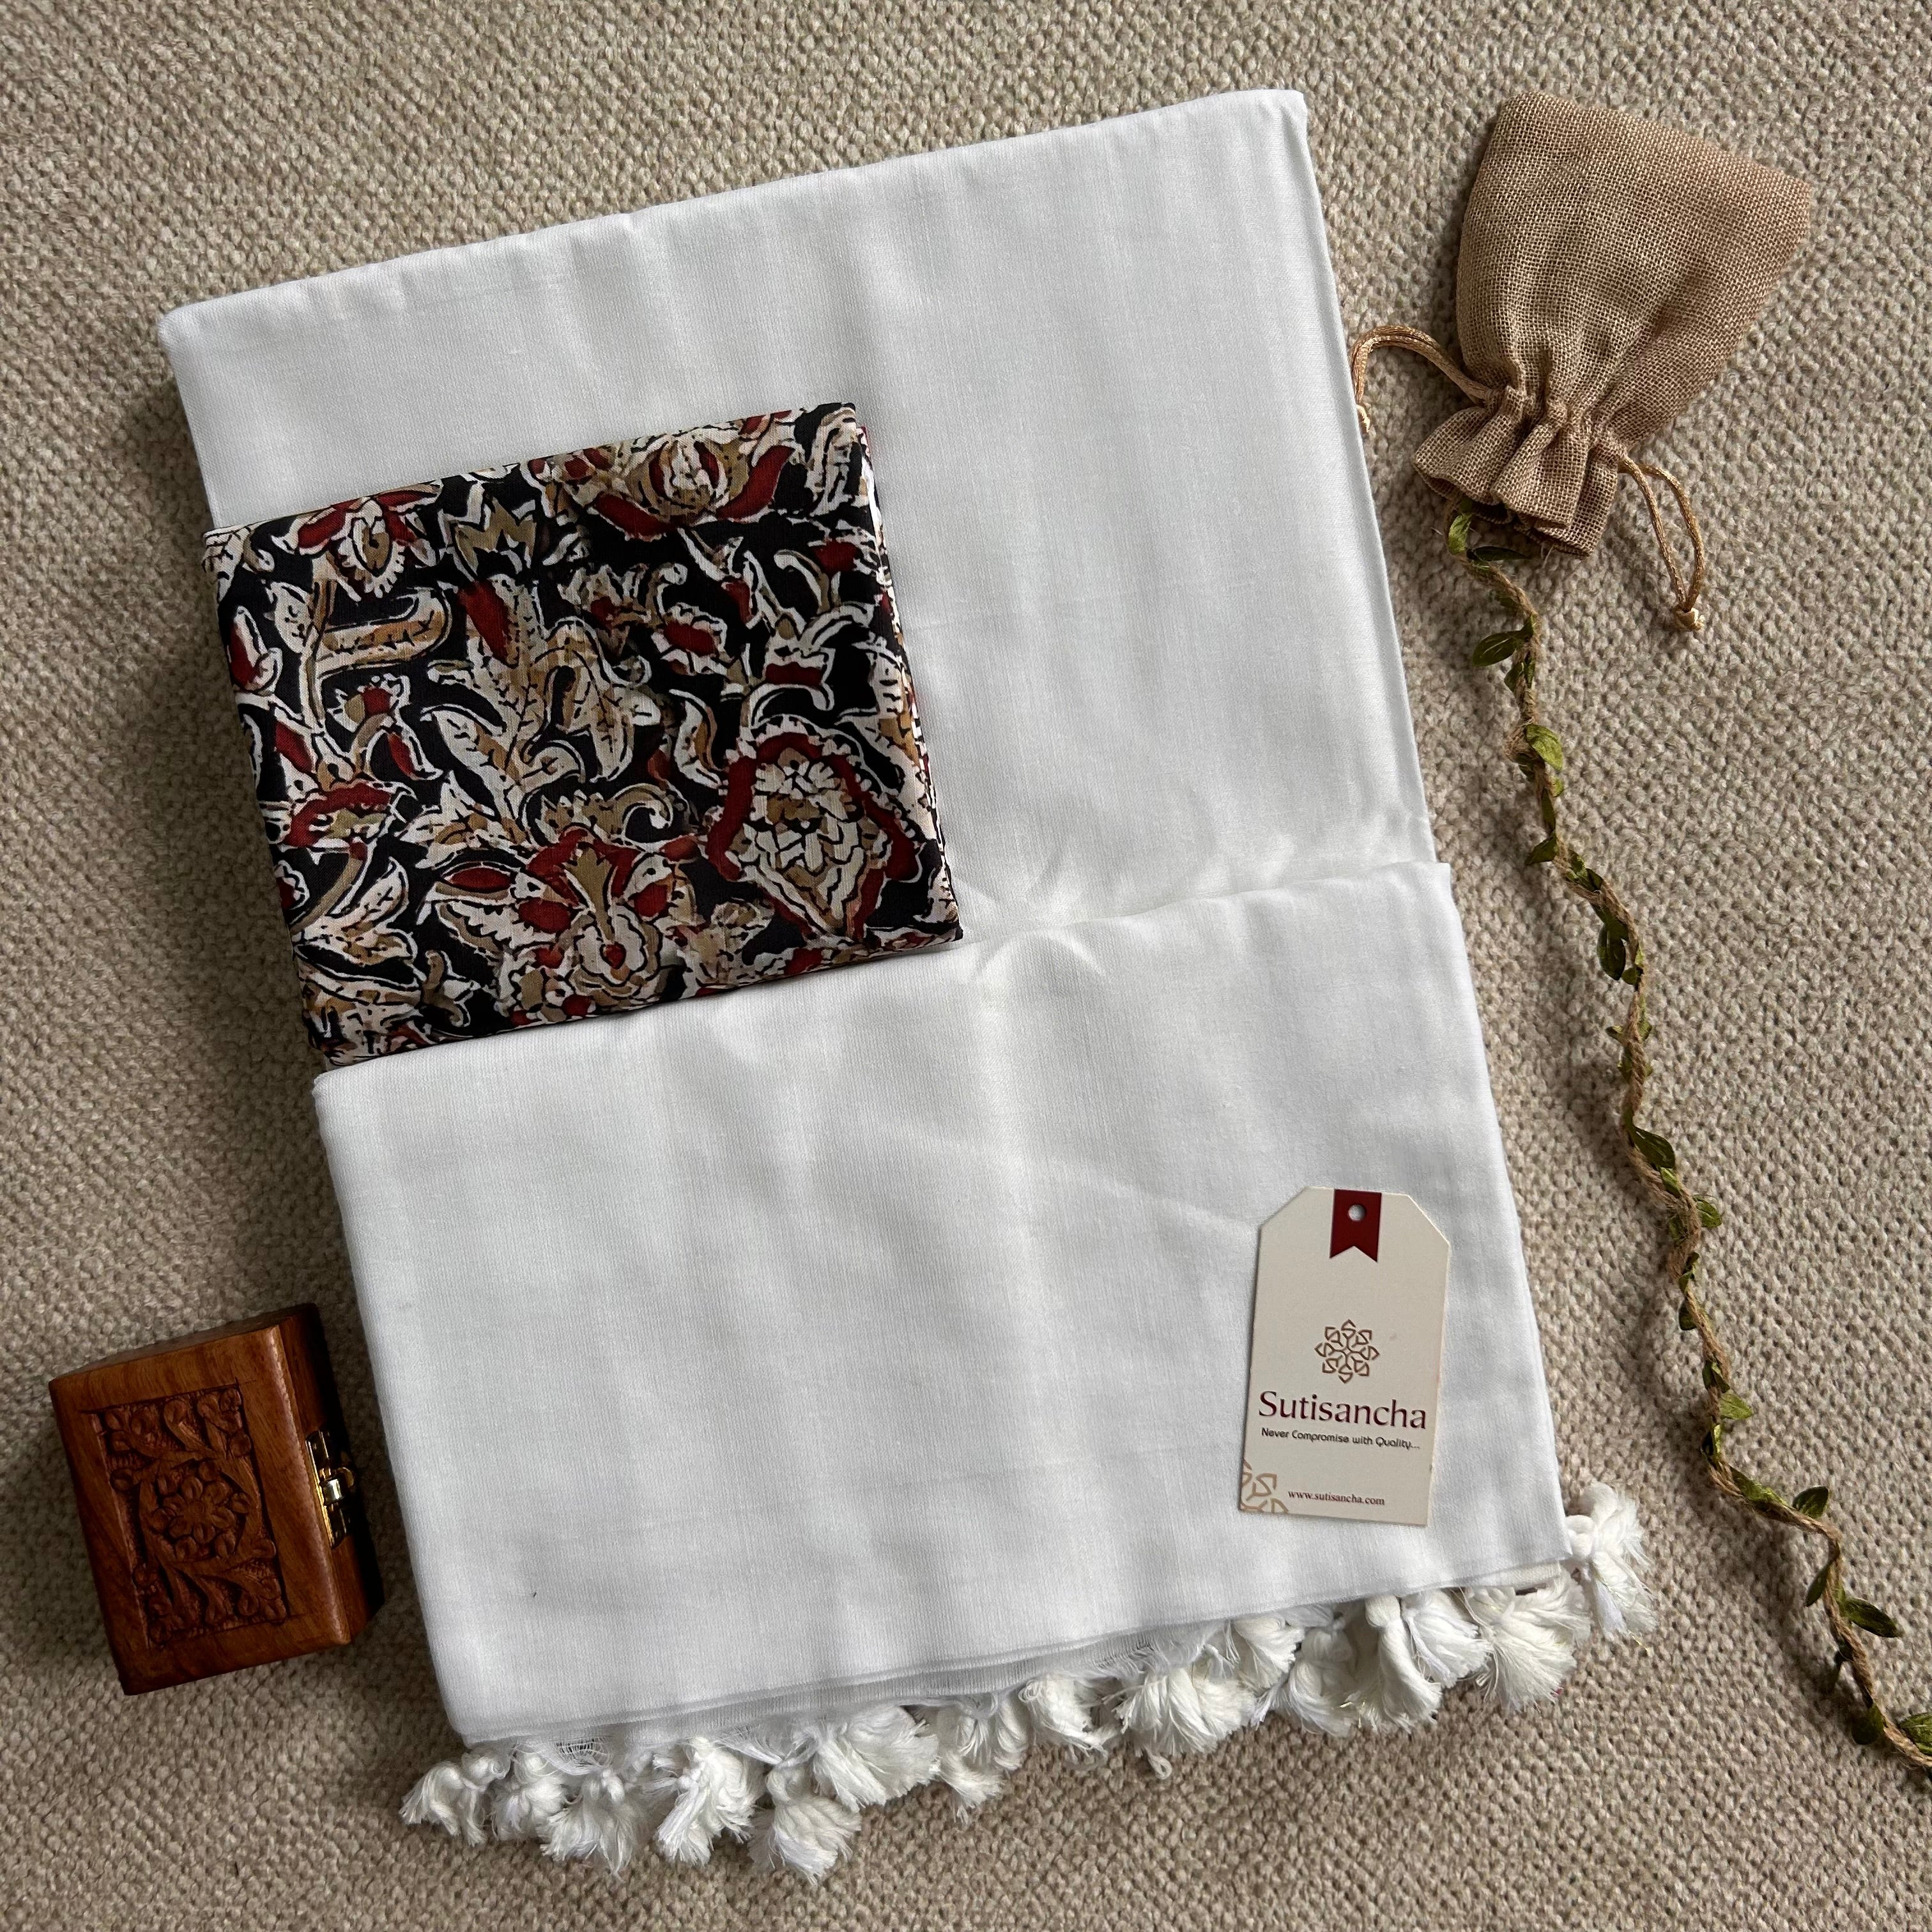 Sutisancha White Handloom Cotton Saree with Kalamkari Blouse